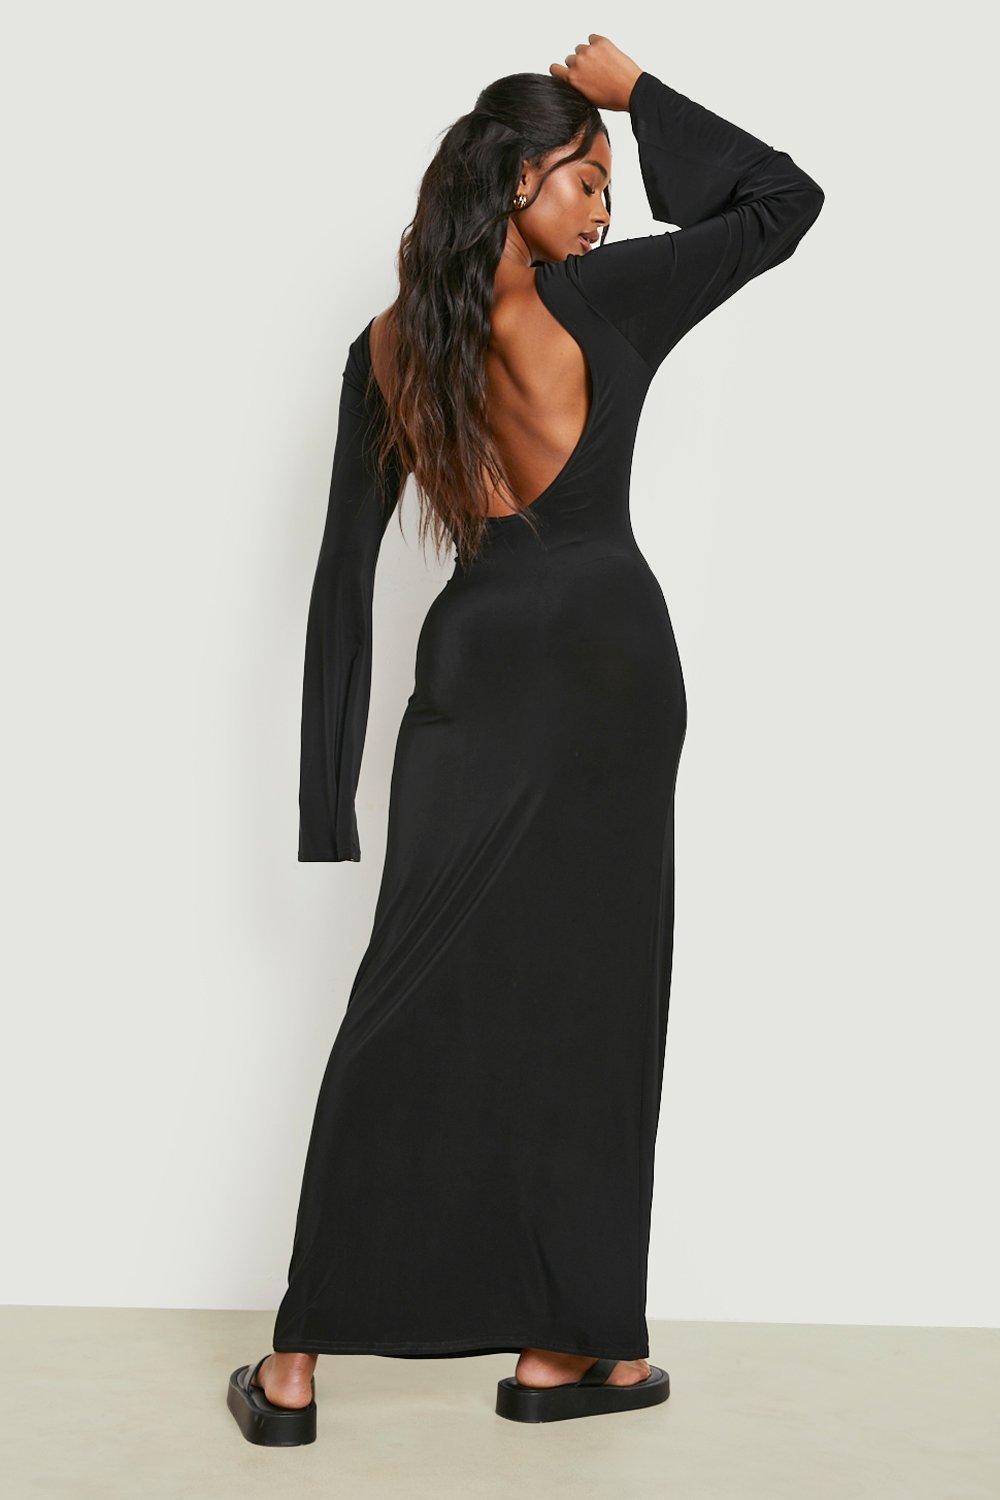 low back black dress